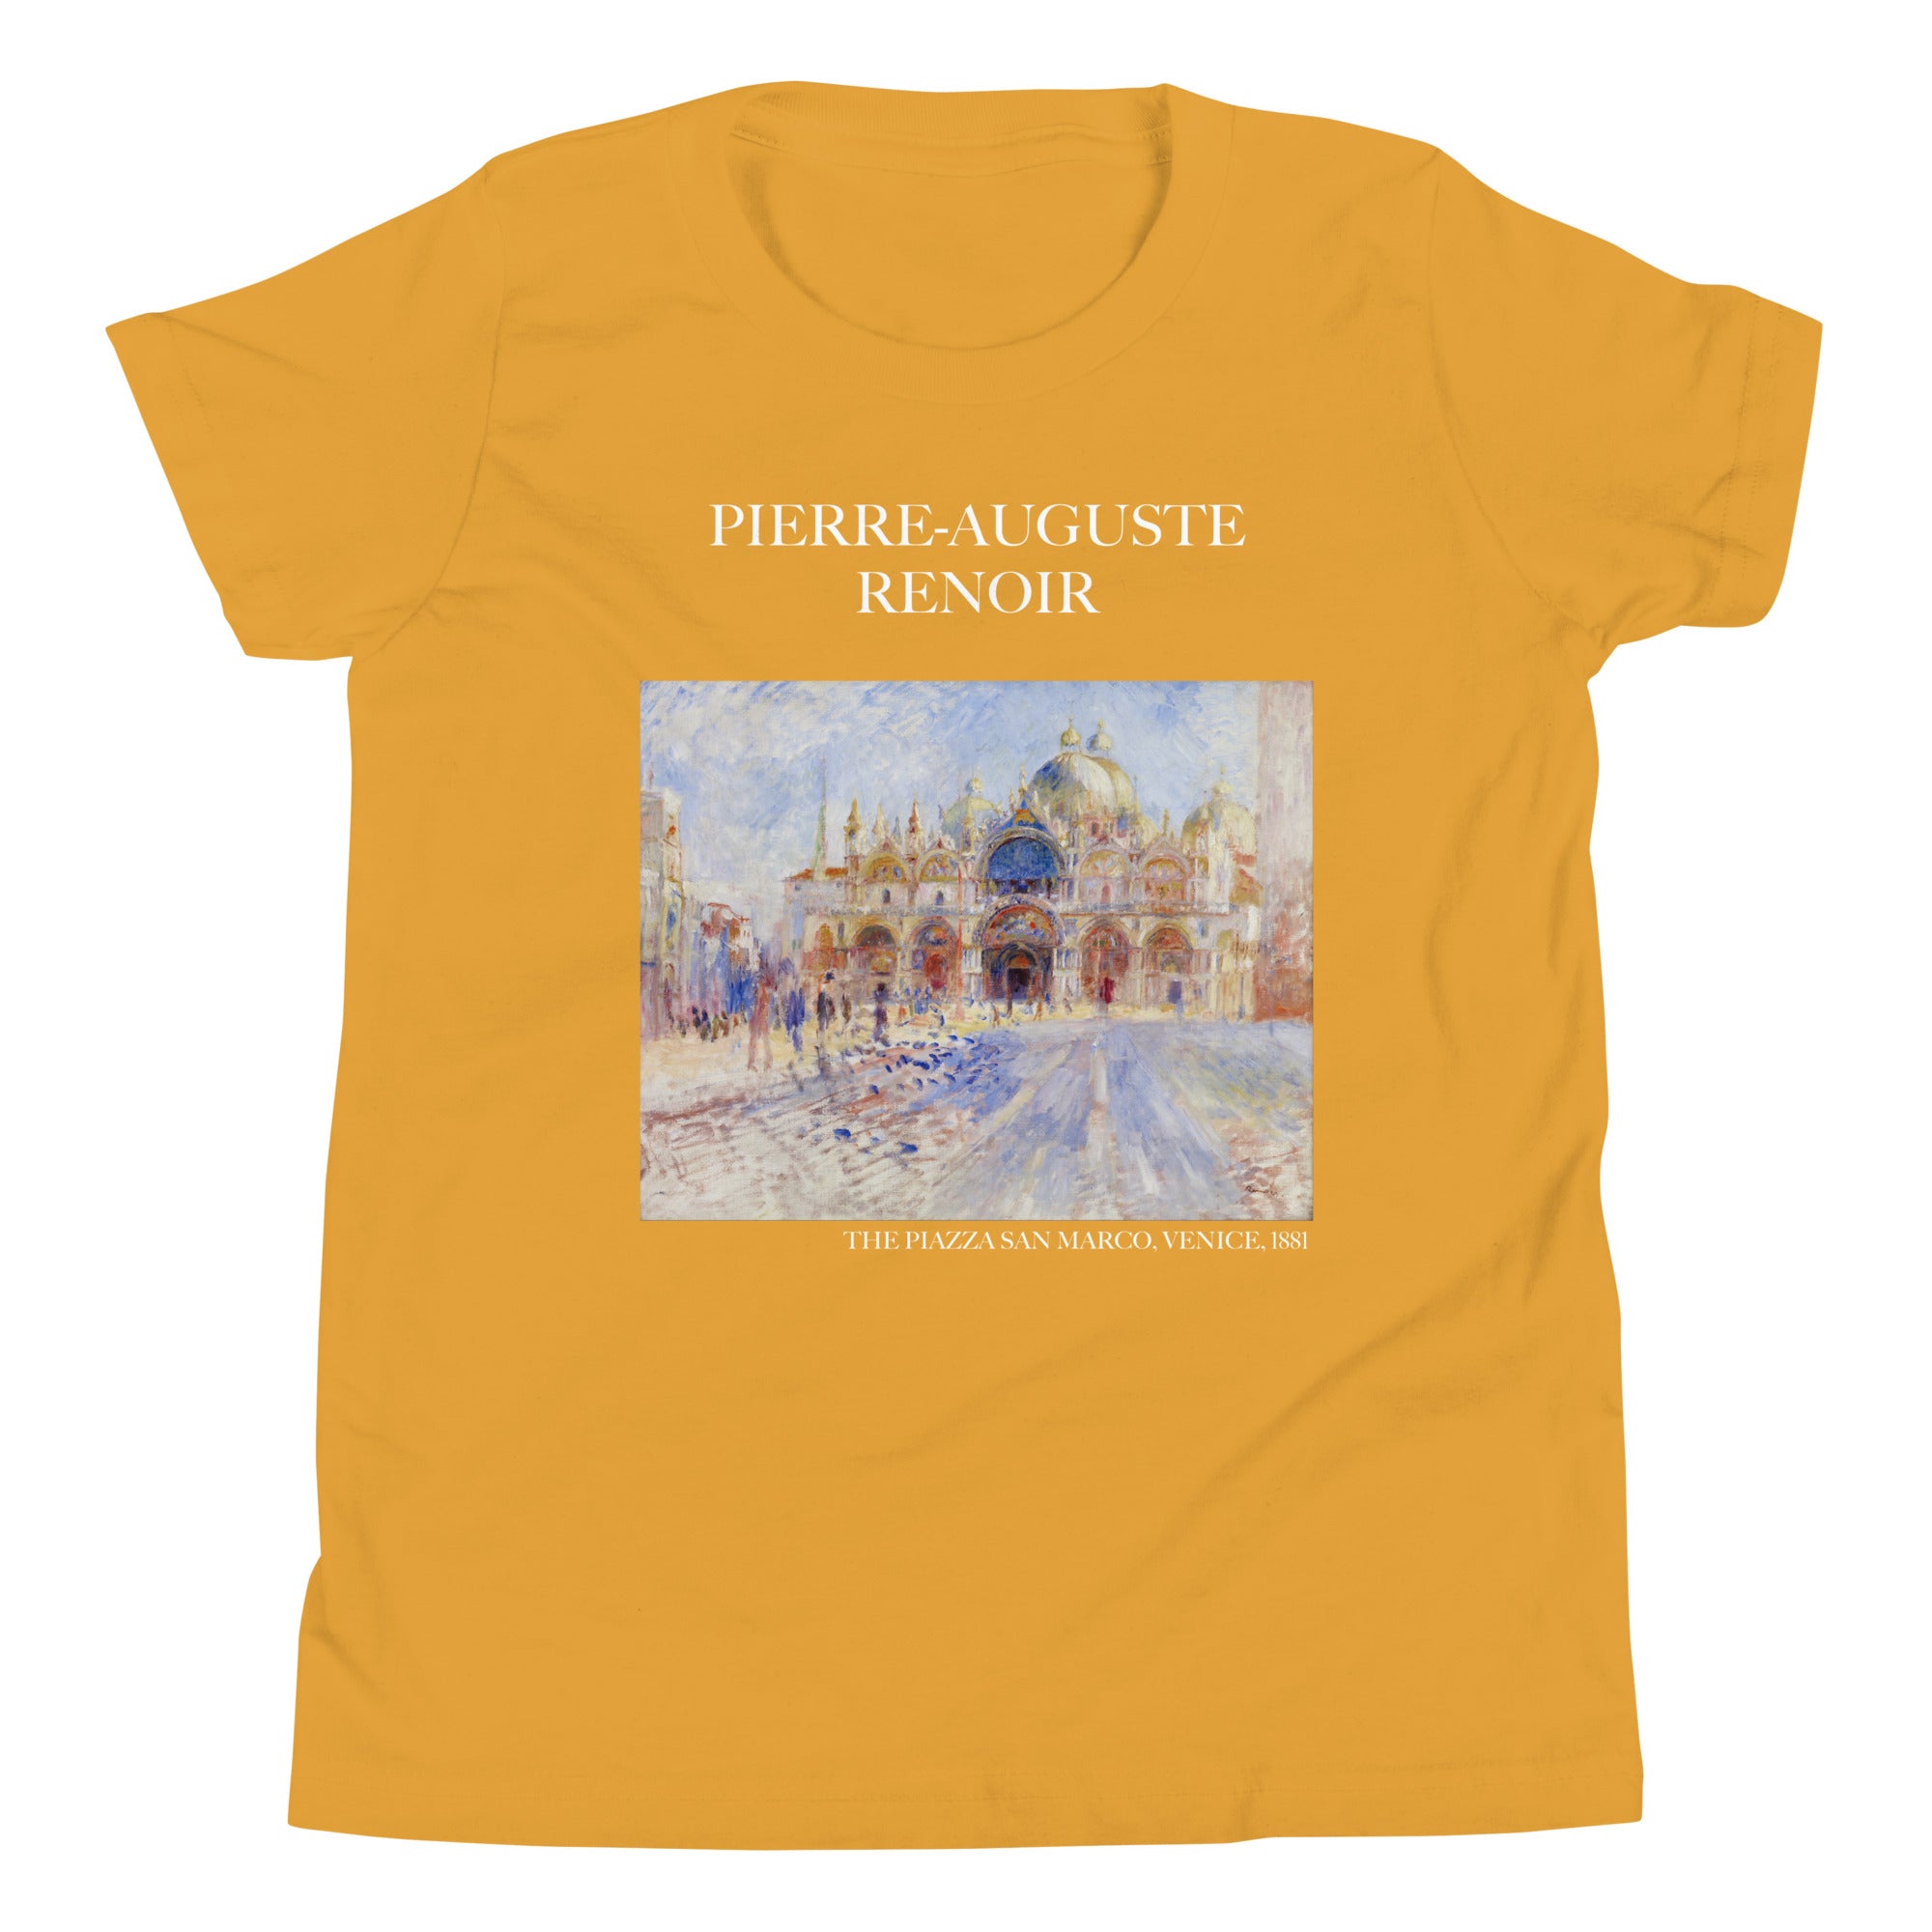 Pierre-Auguste Renoir 'The Piazza San Marco, Venice' Famous Painting Short Sleeve T-Shirt | Premium Youth Art Tee